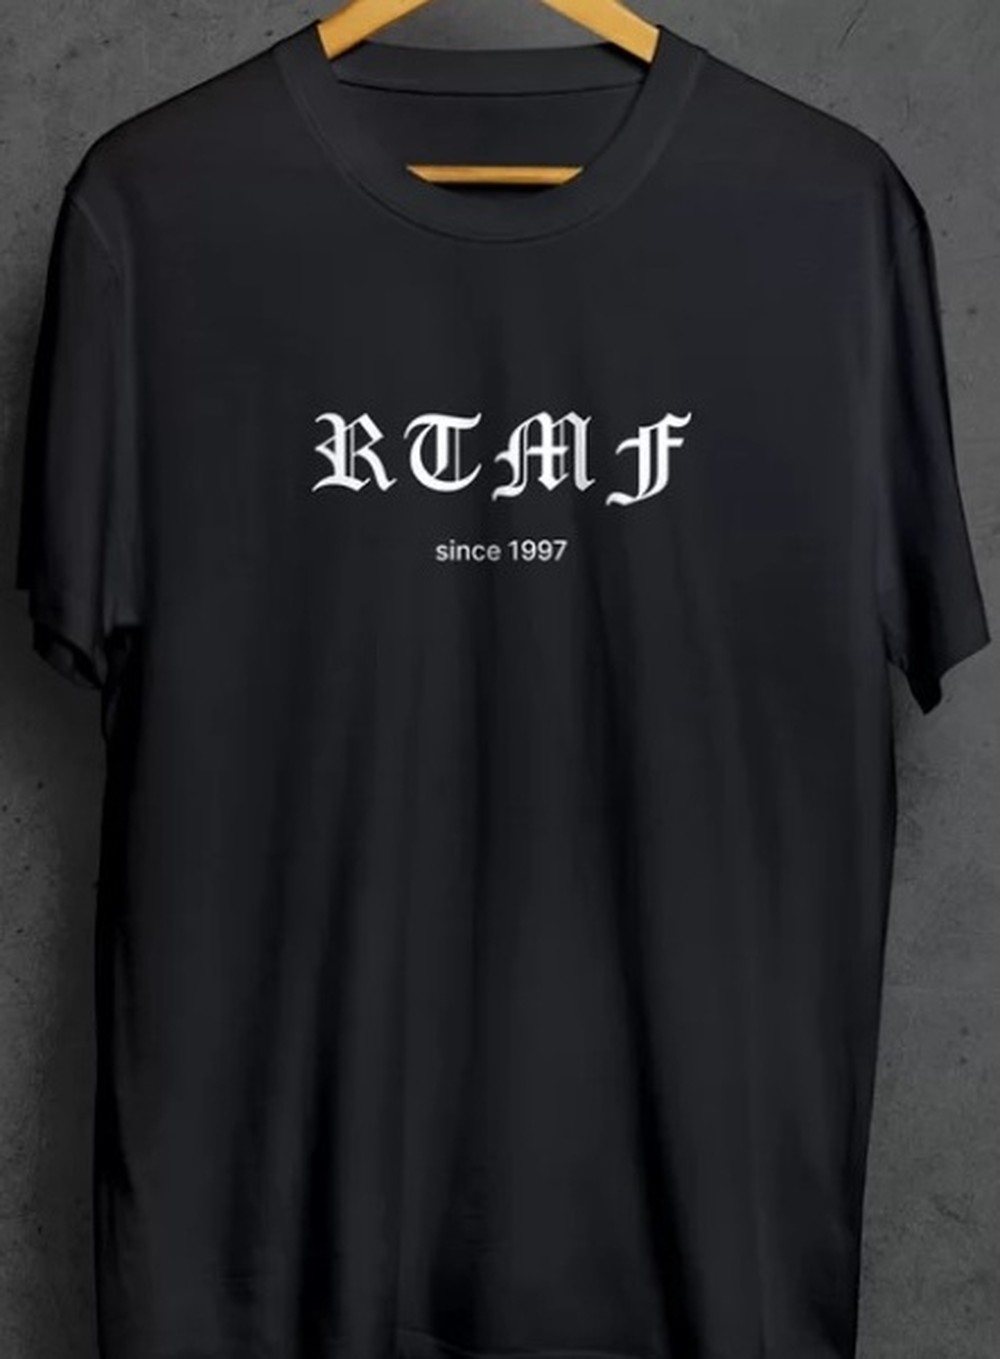 Camiseta Layback RTMF Since 1997 Preto